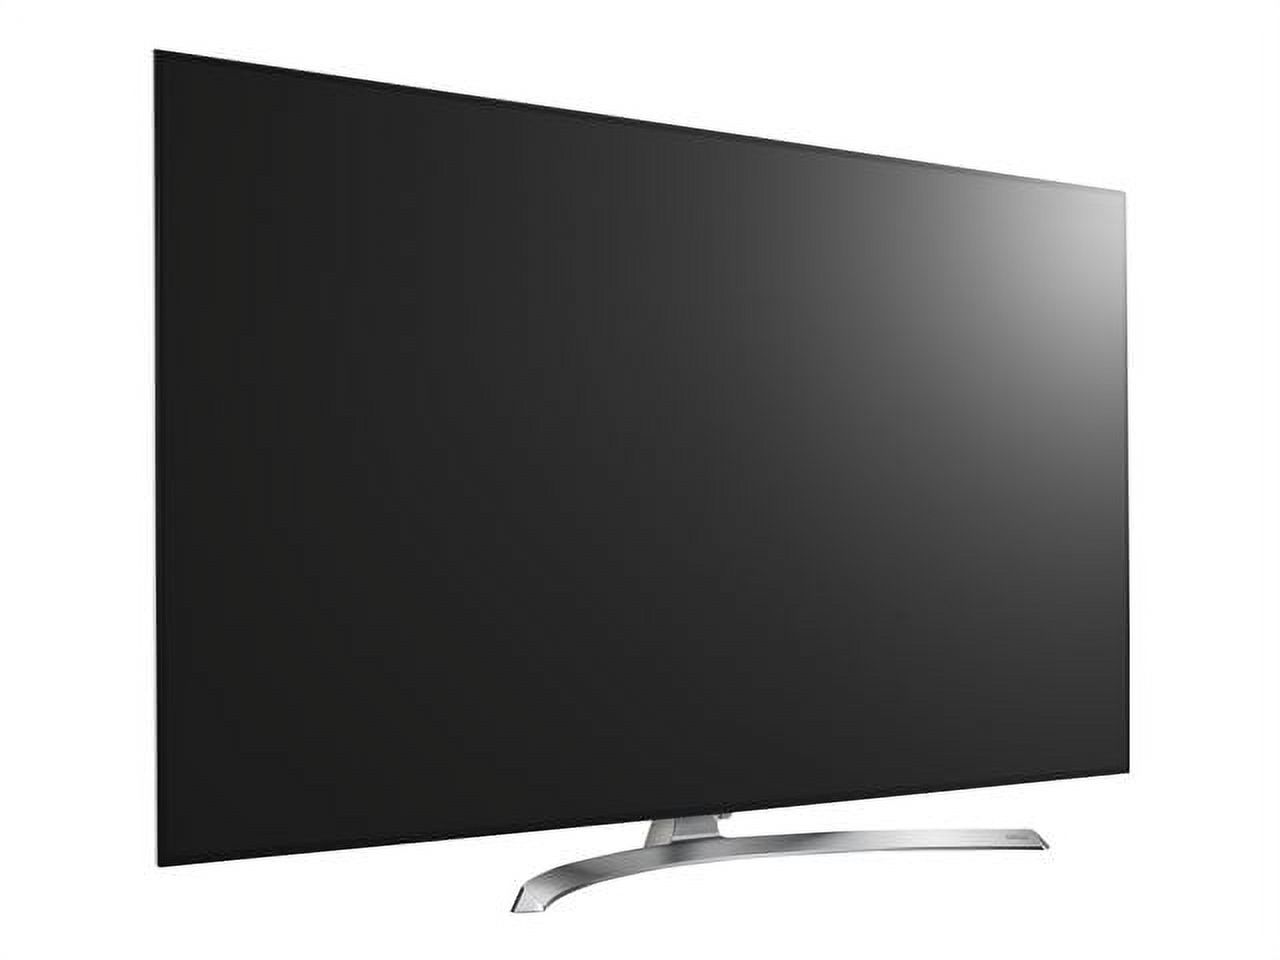 LG 55SJ8500 - 55" Diagonal Class (54.6" viewable) - SJ8500 Series LED-backlit LCD TV - Smart TV - webOS - 4K UHD (2160p) 3840 x 2160 - HDR - Nano Cell Display - image 2 of 10